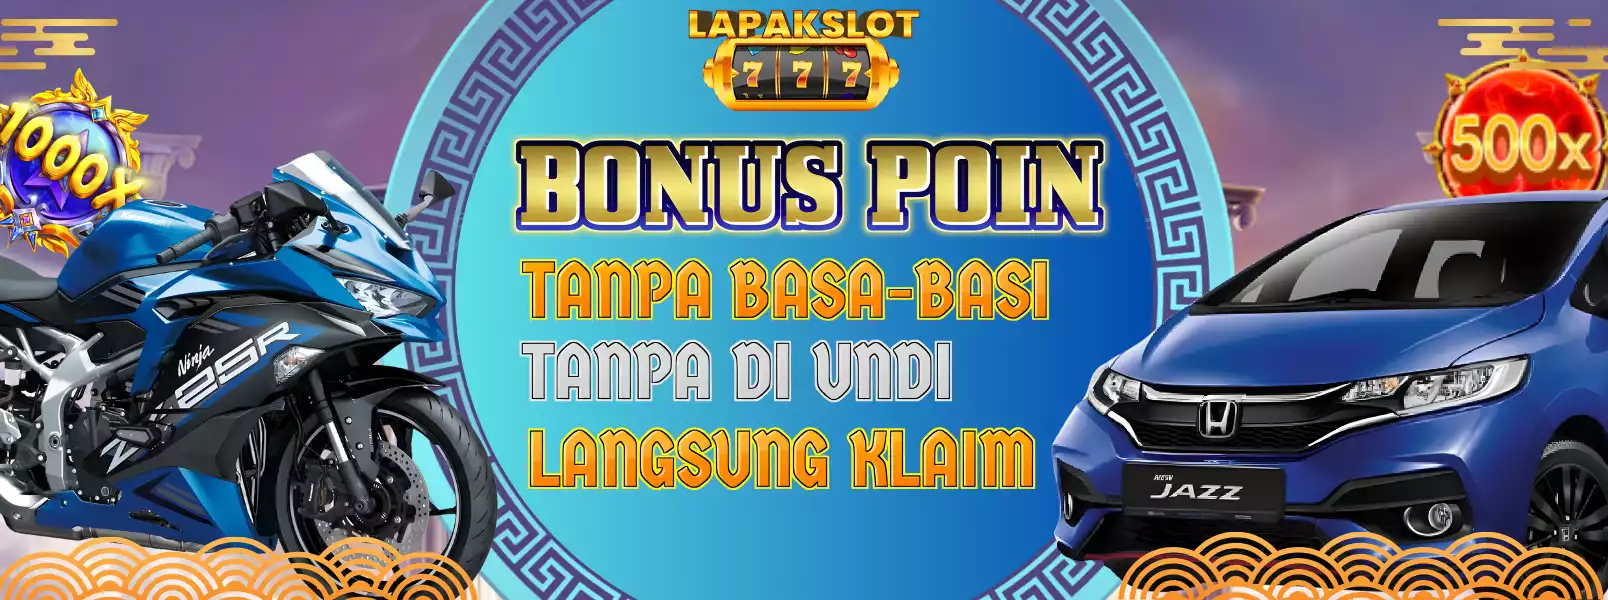 Bonus Poin